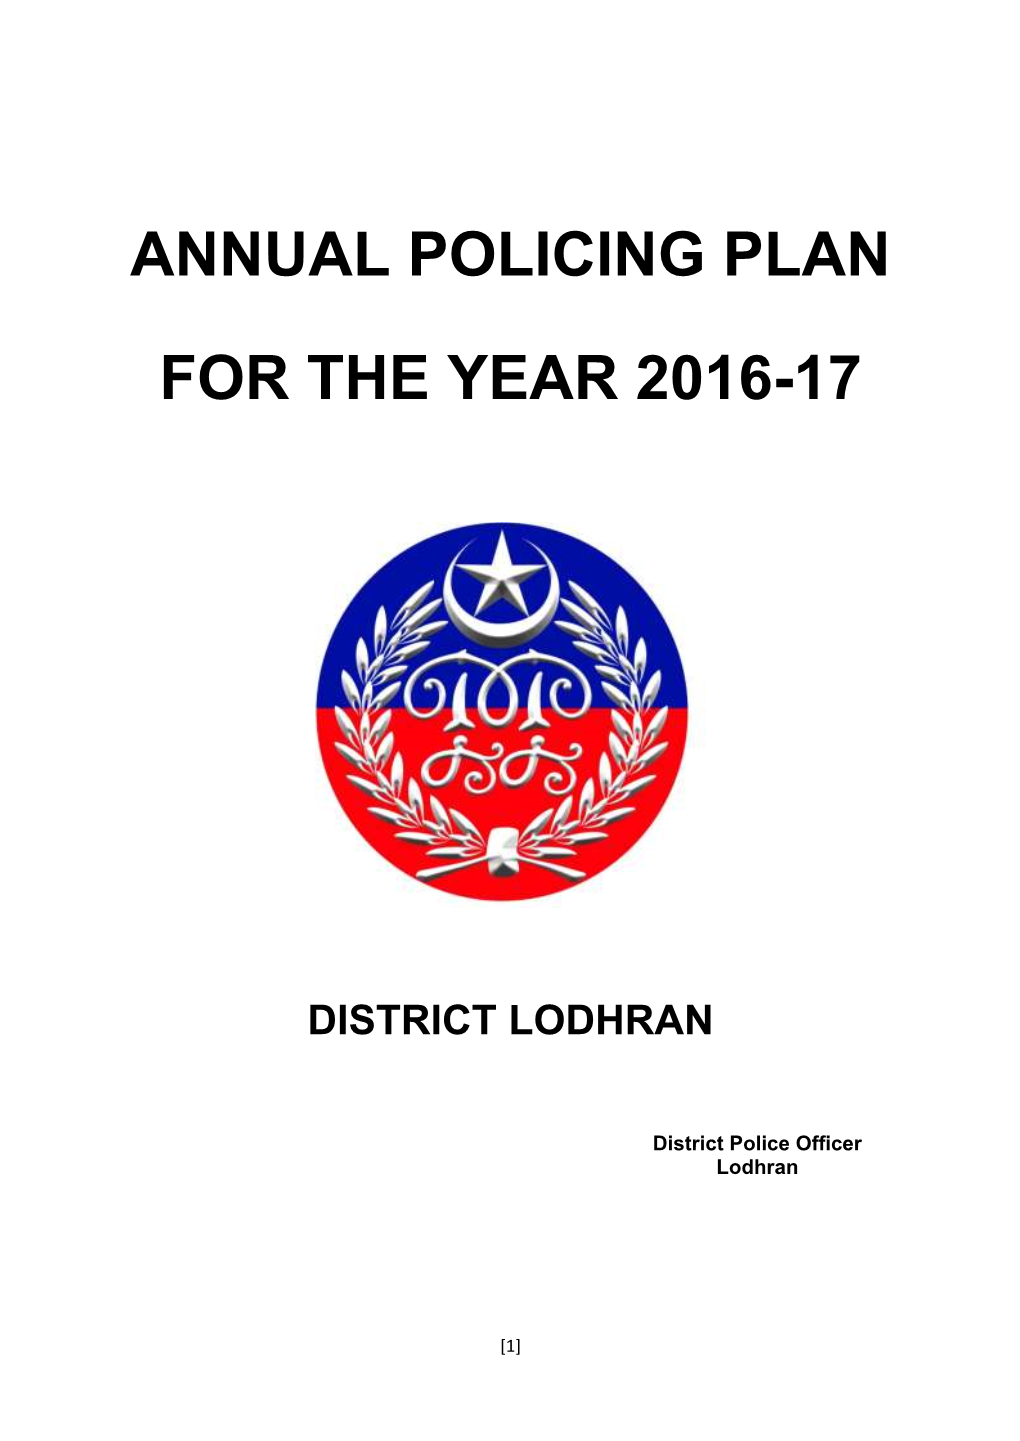 Police Department District Lodhran